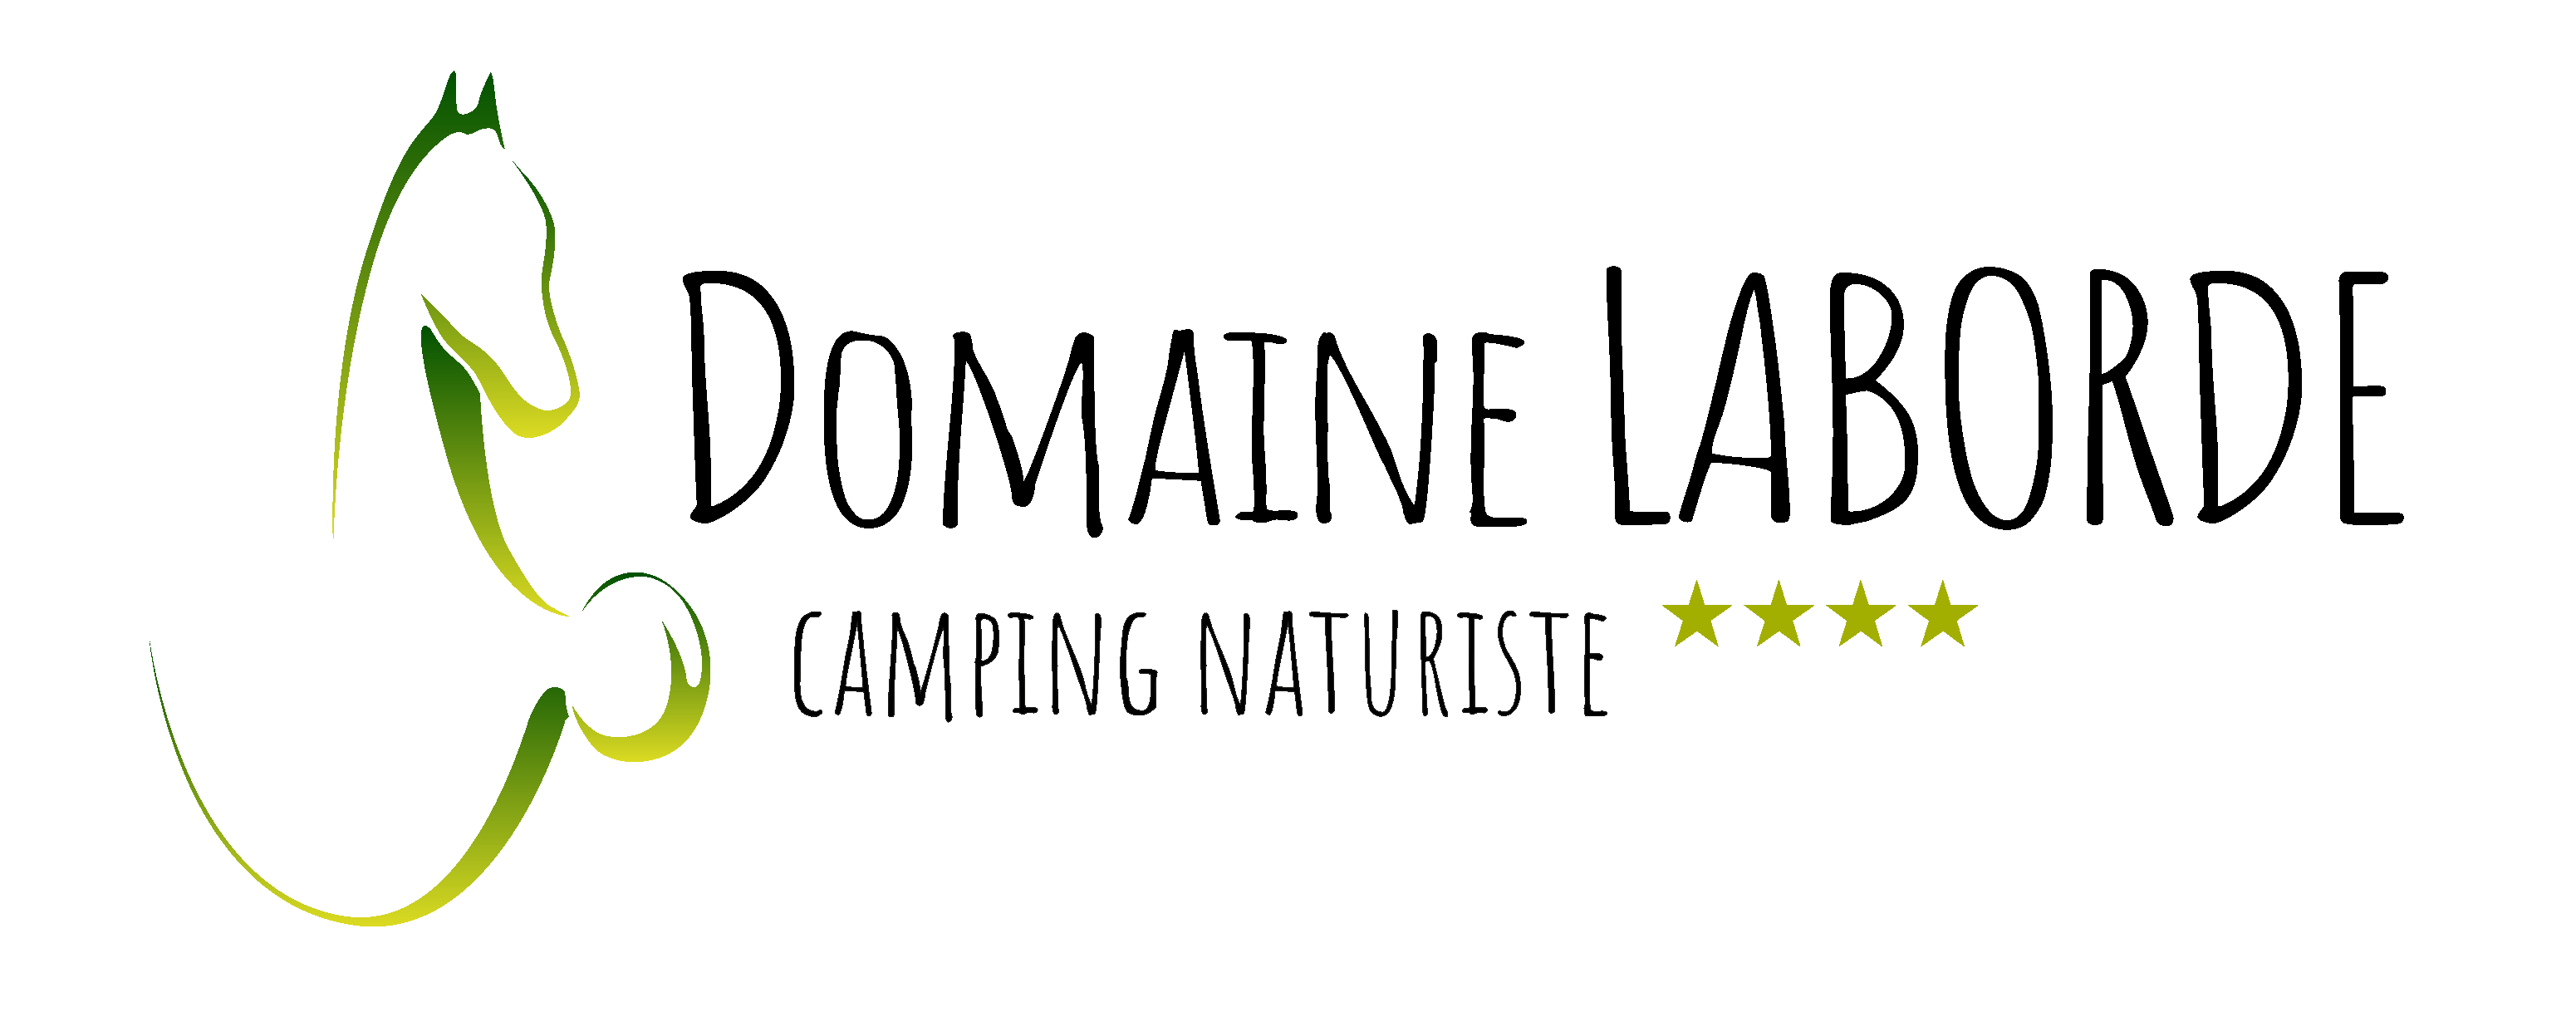 Domaine Laborde naturist campsite & resort, Lot et Garonne (47), Dordogne